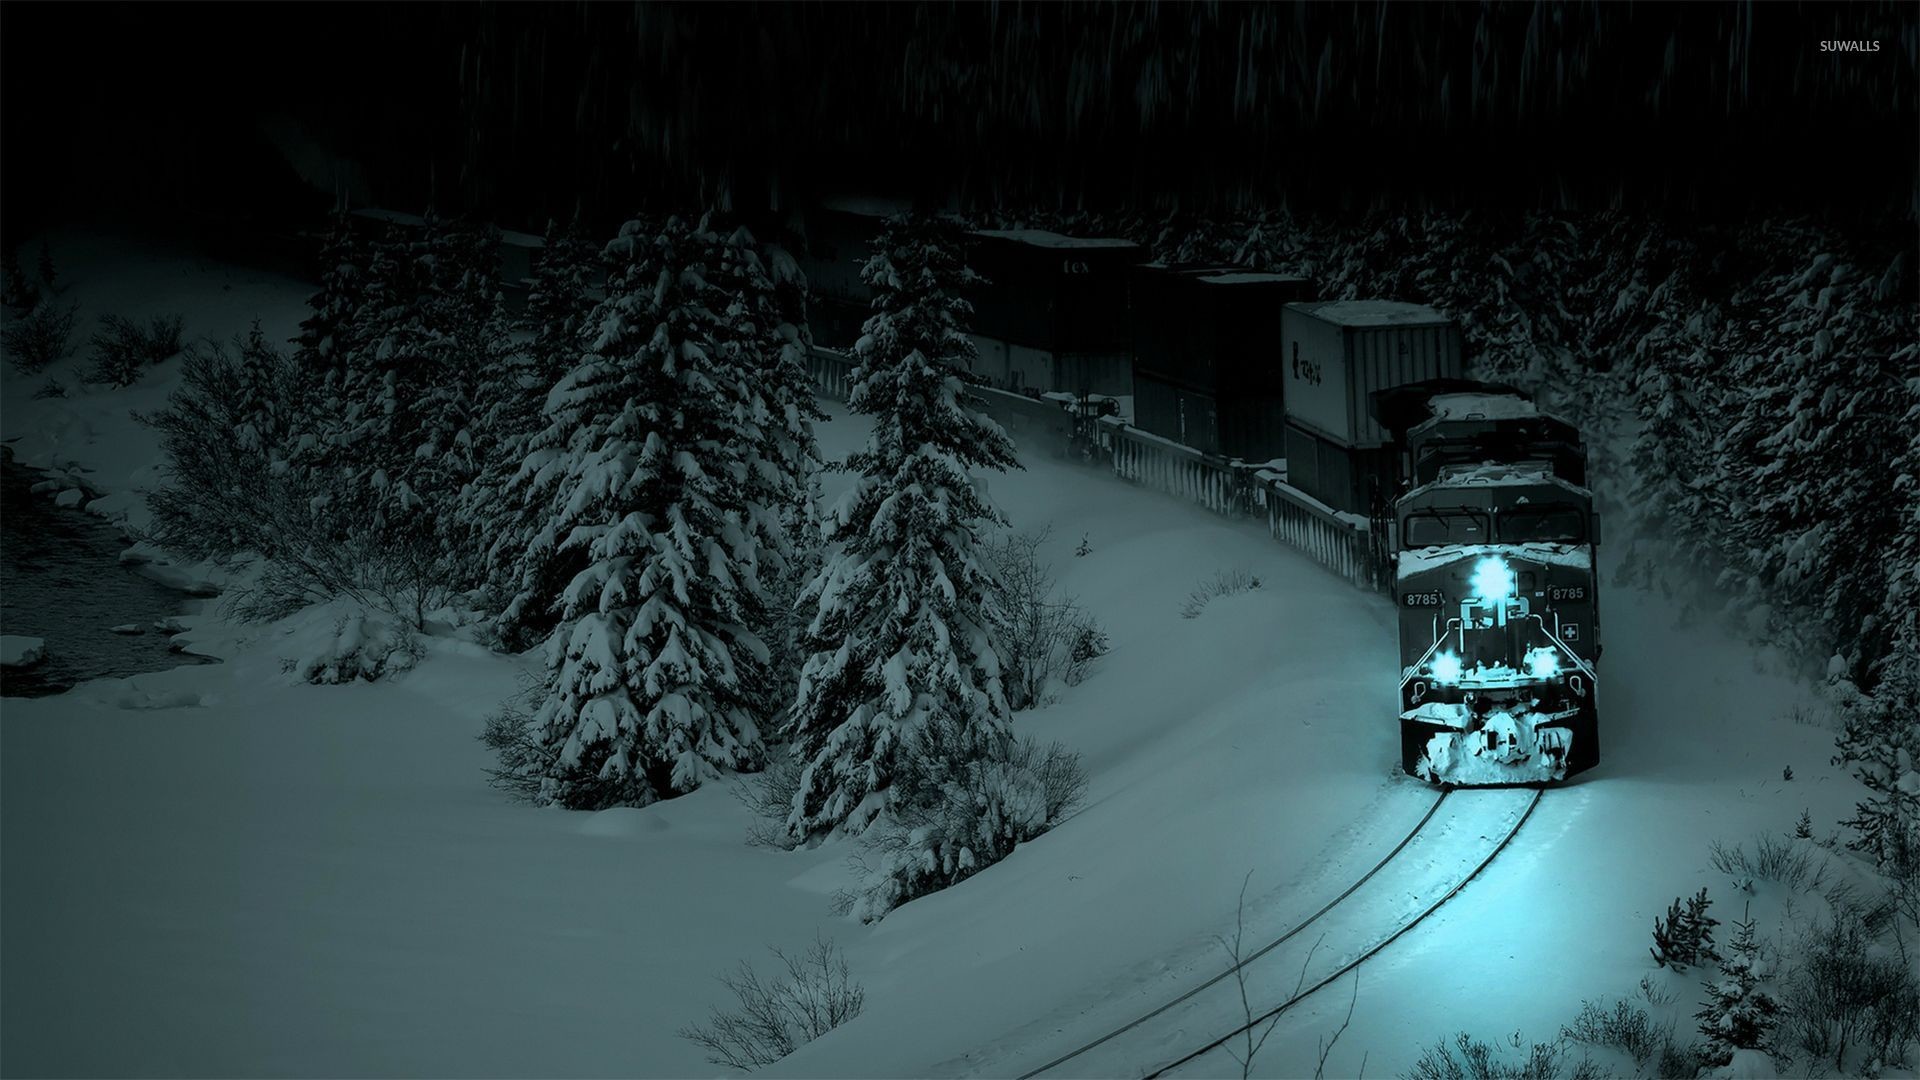 Train in the winter night wallpaper jpg